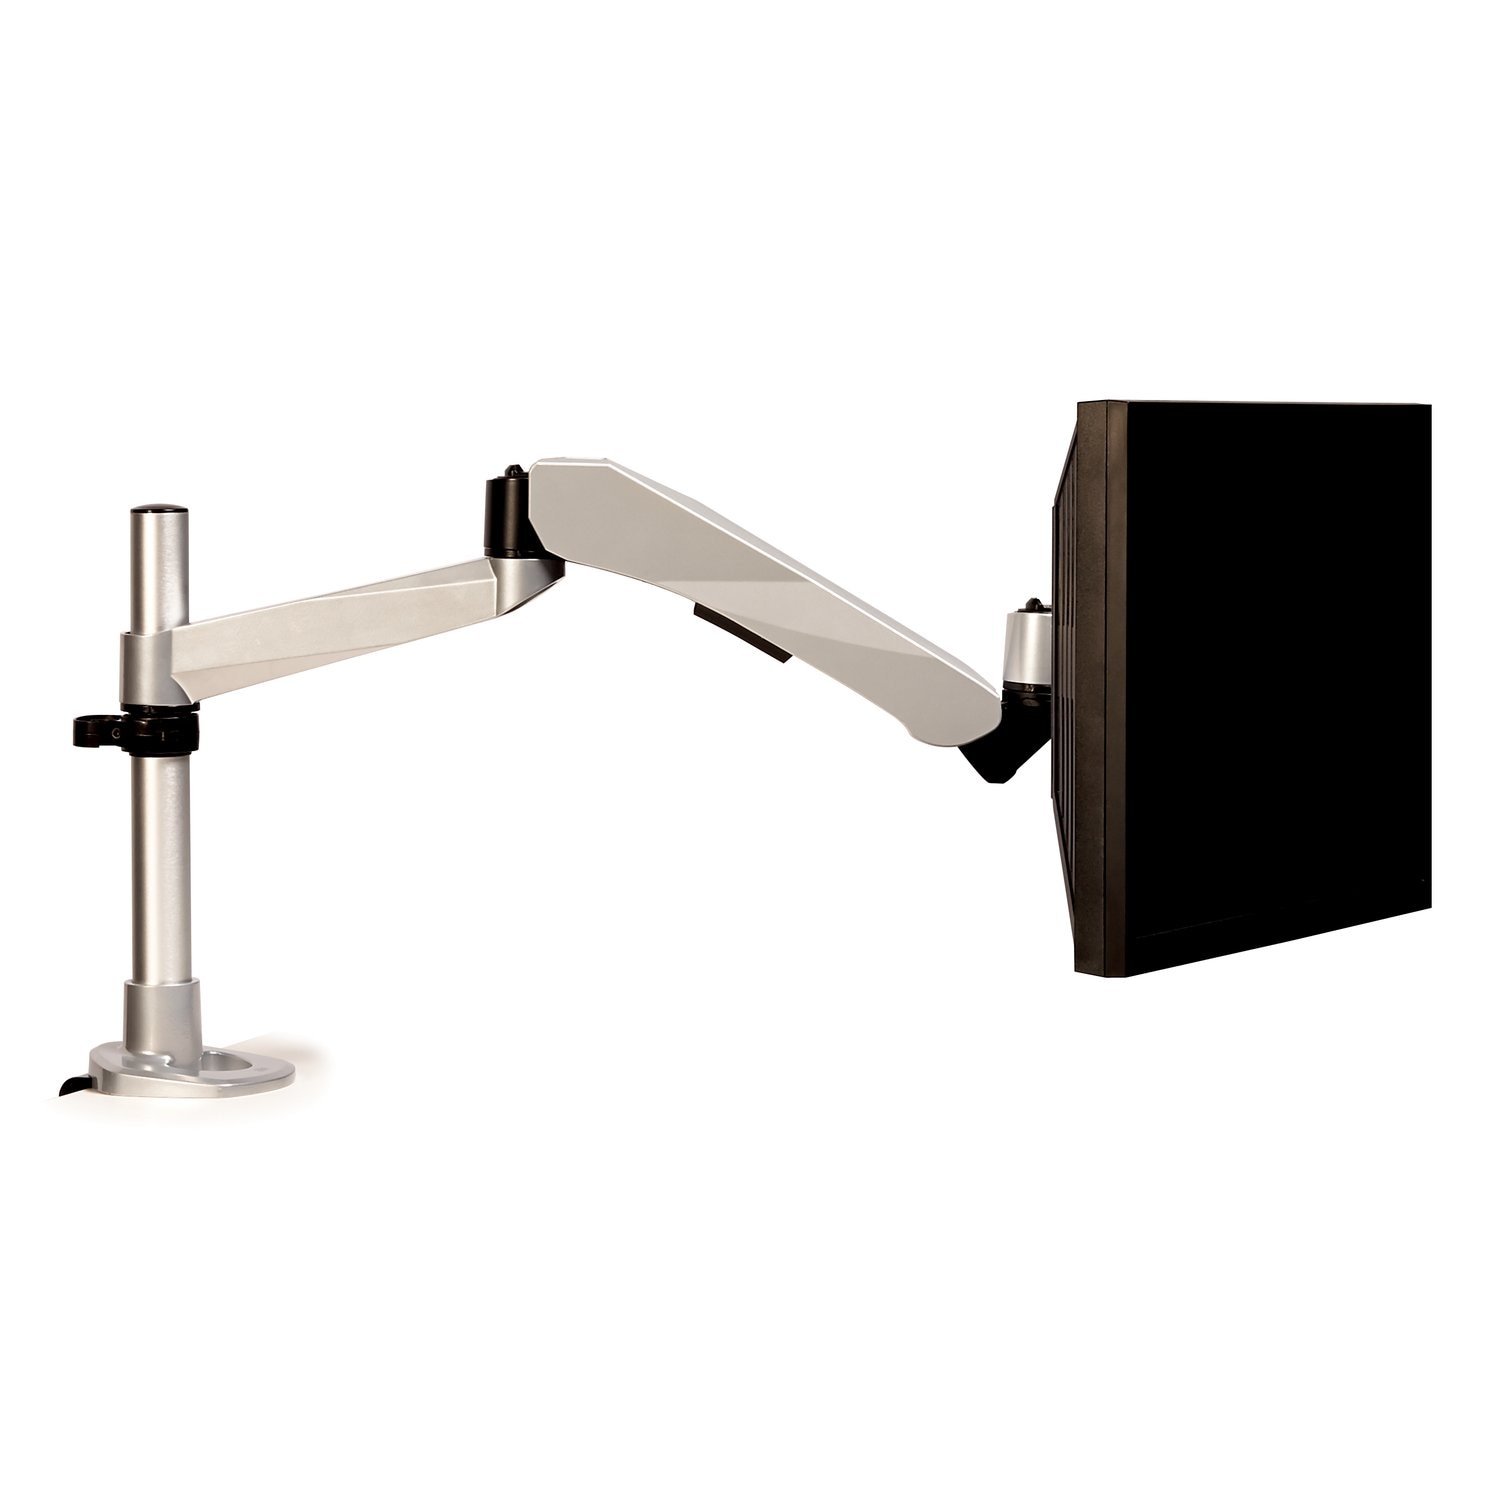 7100015744 - 3M Easy Adjust Desk Mount Single Monitor Arm, Silver, MA245S